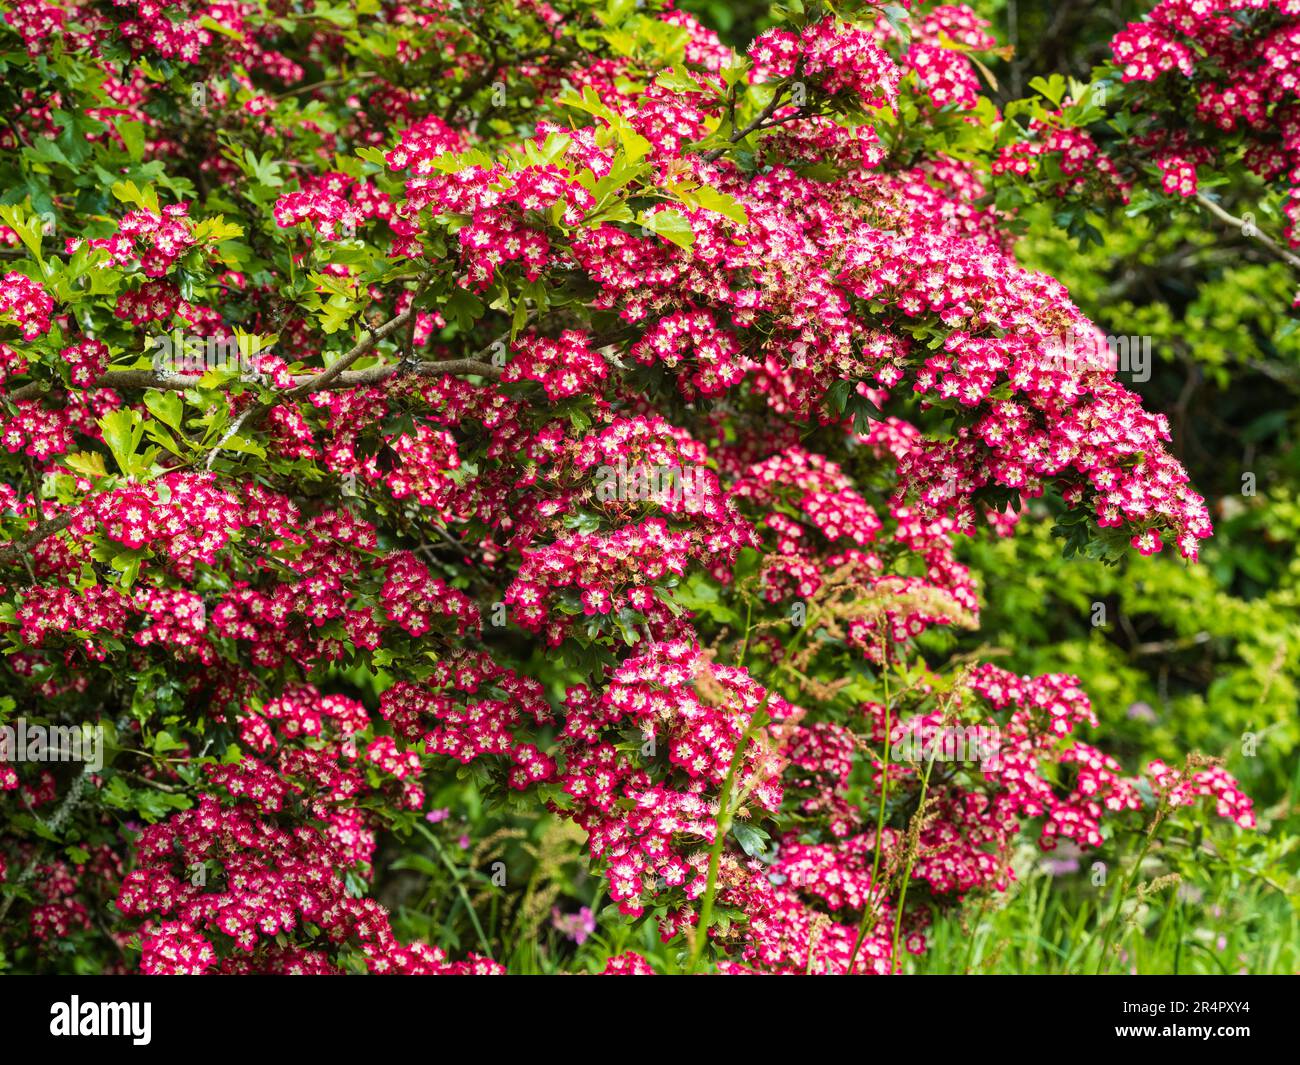 Massed red flowers of the ornamental hawthorn tree, Crataegus laevigata 'Paul's Scarlet' Stock Photo